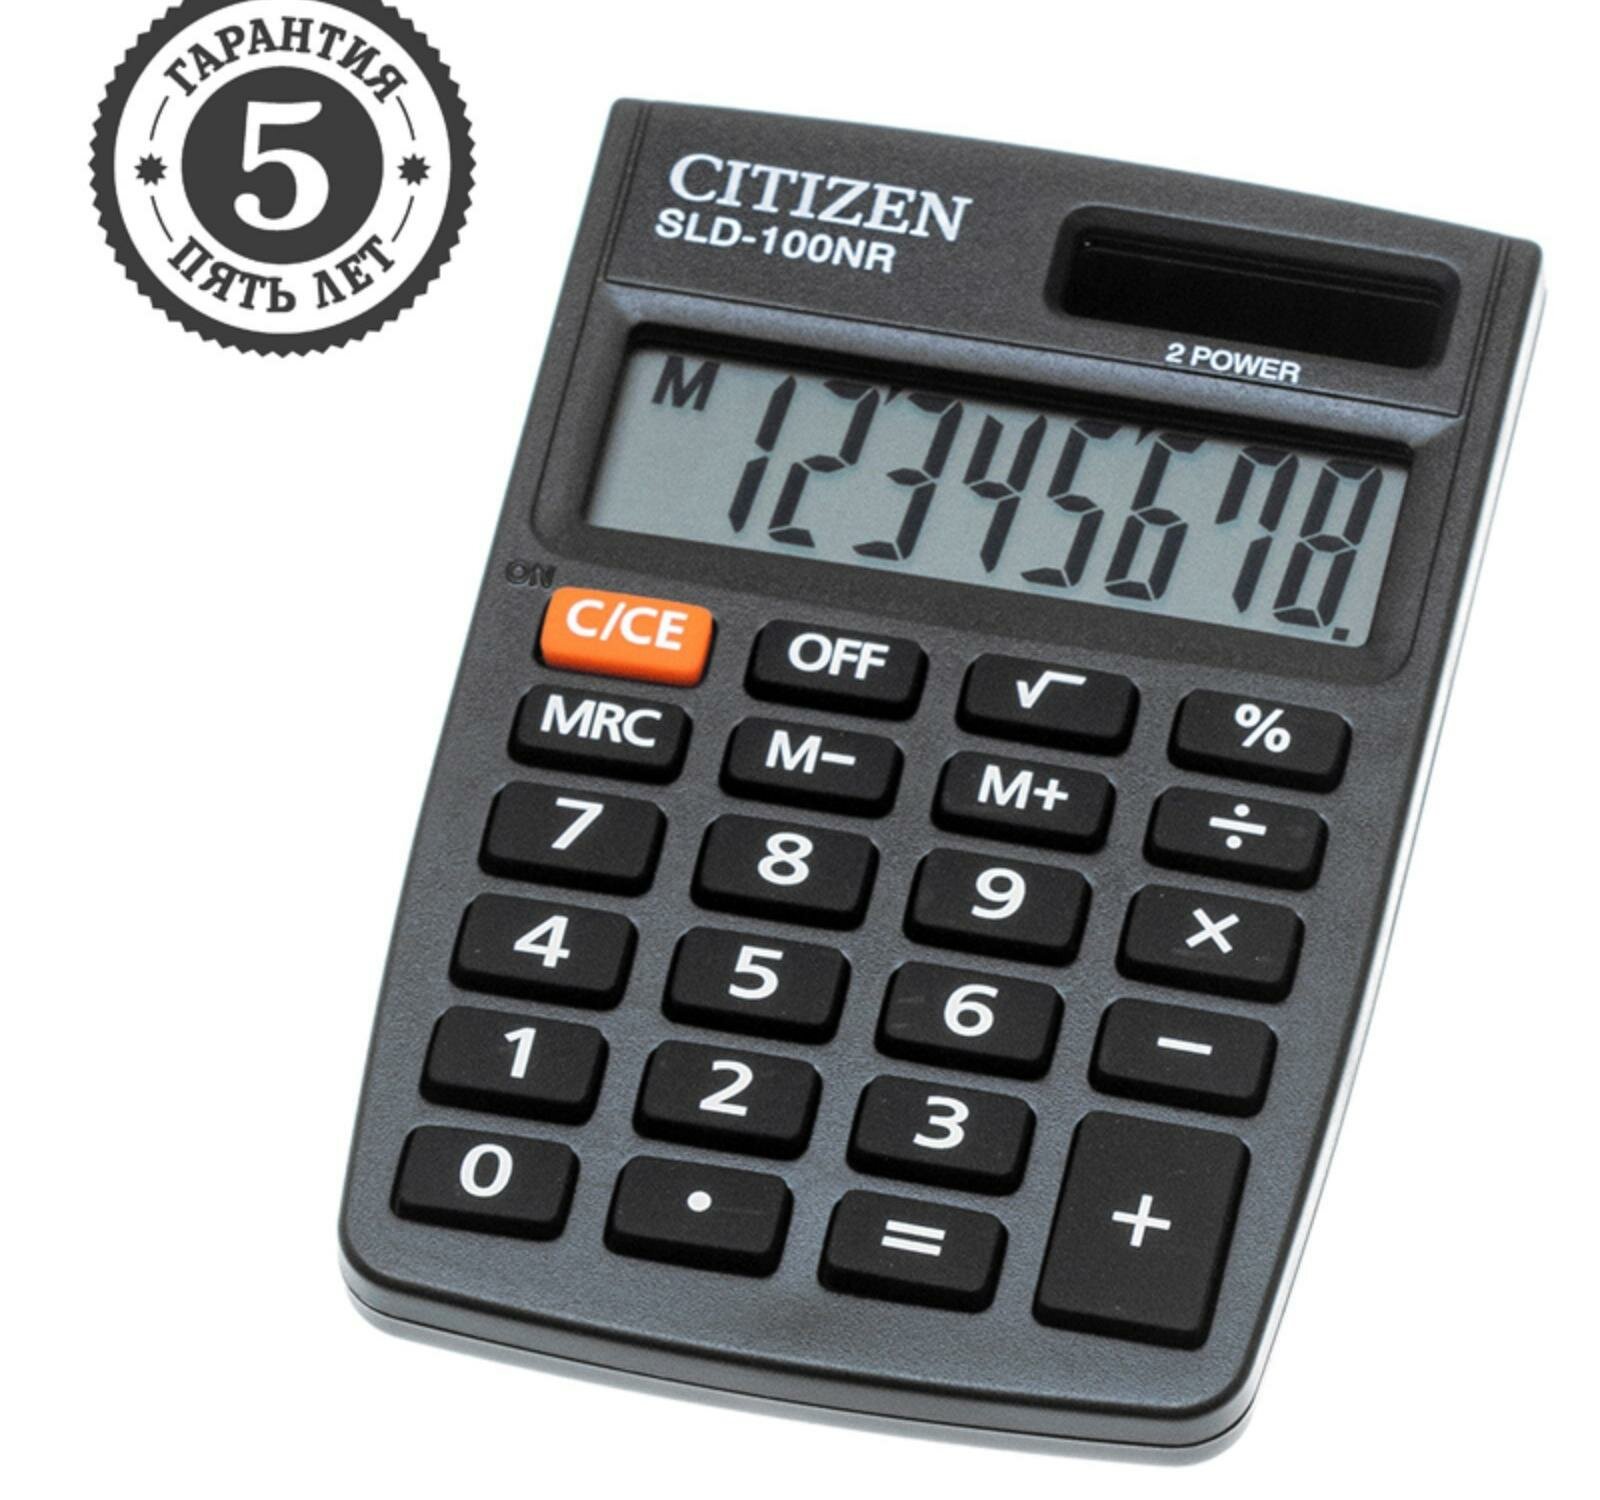 Калькулятор карманный Citizen "SLD-100NR" 8-разрядный 58 х 88 х 10 мм двойное питание чёрный